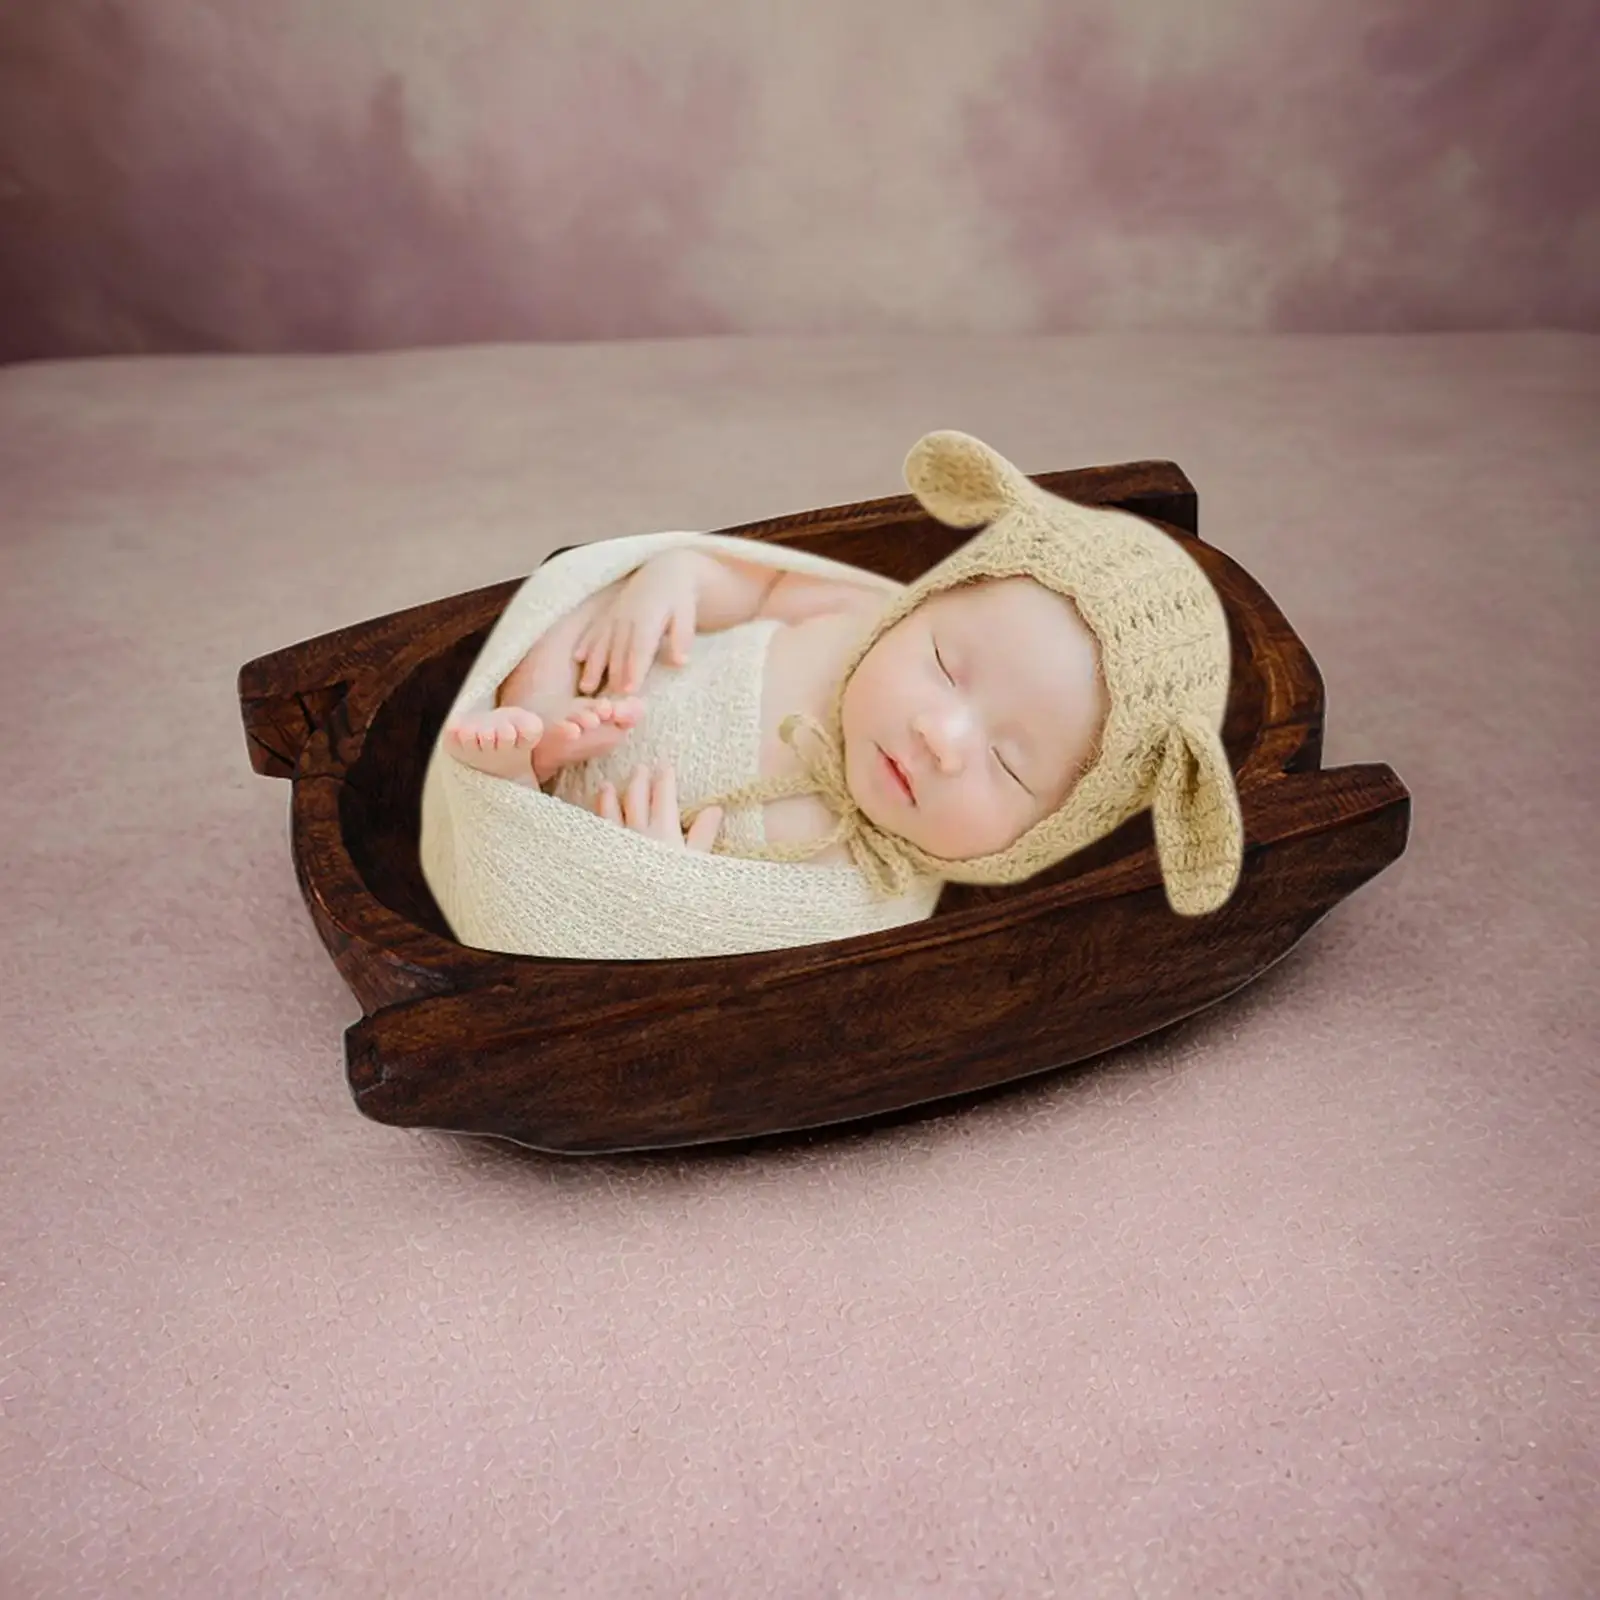 Newborn Infants Photography Props Decoration Wooden Prop Posing Sofa Baskets for Newborn Baby Shower Baby Girls Boys Birthday